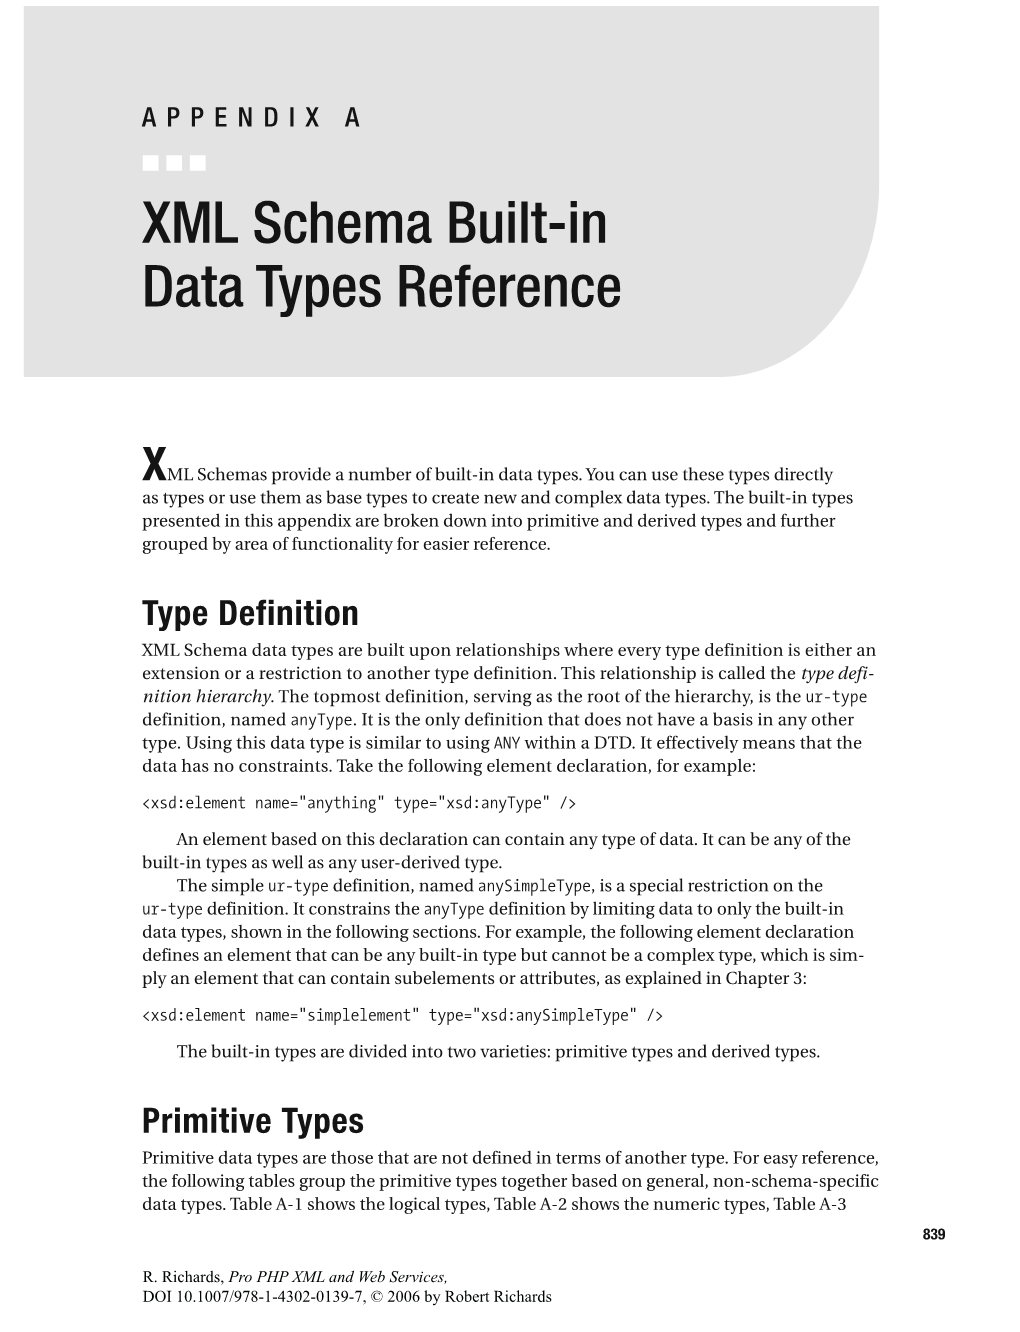 XML Schema Built-In Data Types Reference